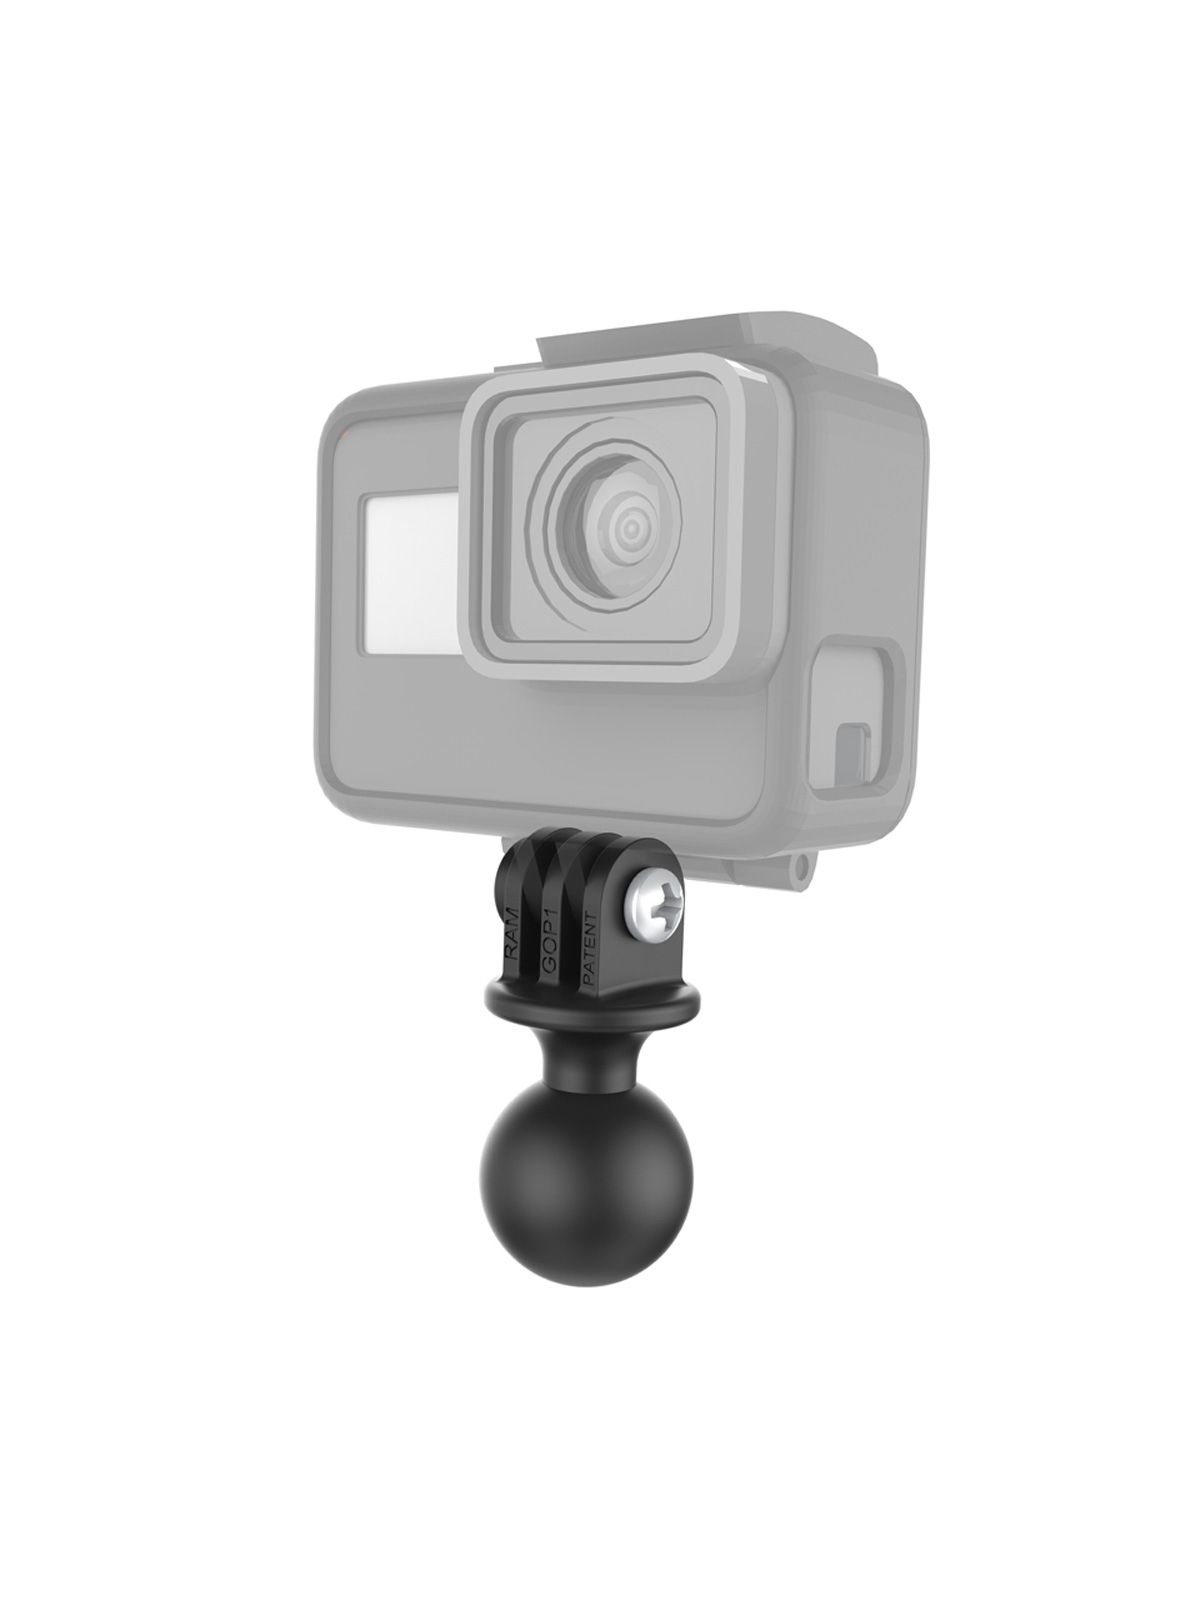 RAM Mounts GoPro Kamera-Adapter - Verbundstoff, B-Kugel (1 Zoll), im Polybeutel